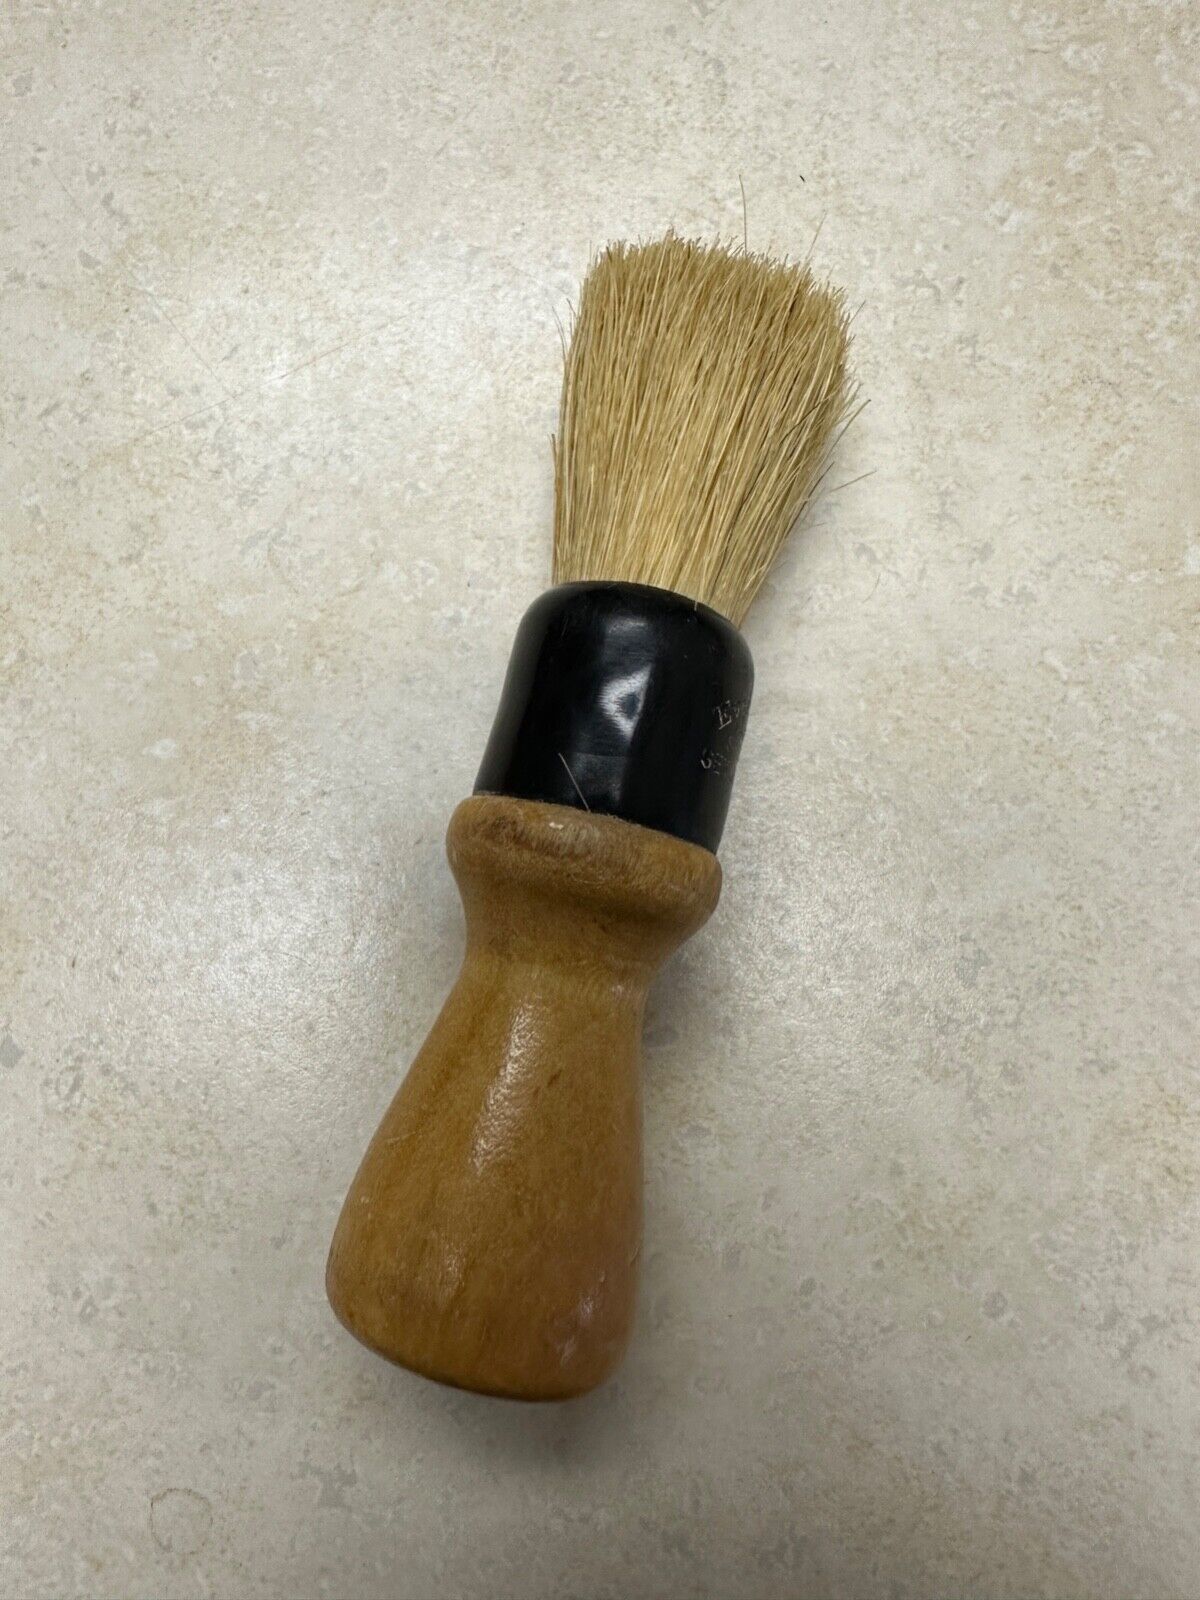 Vintage EVER-READY Shaving Brush Sterilized Set in Rubber, Wood Grip